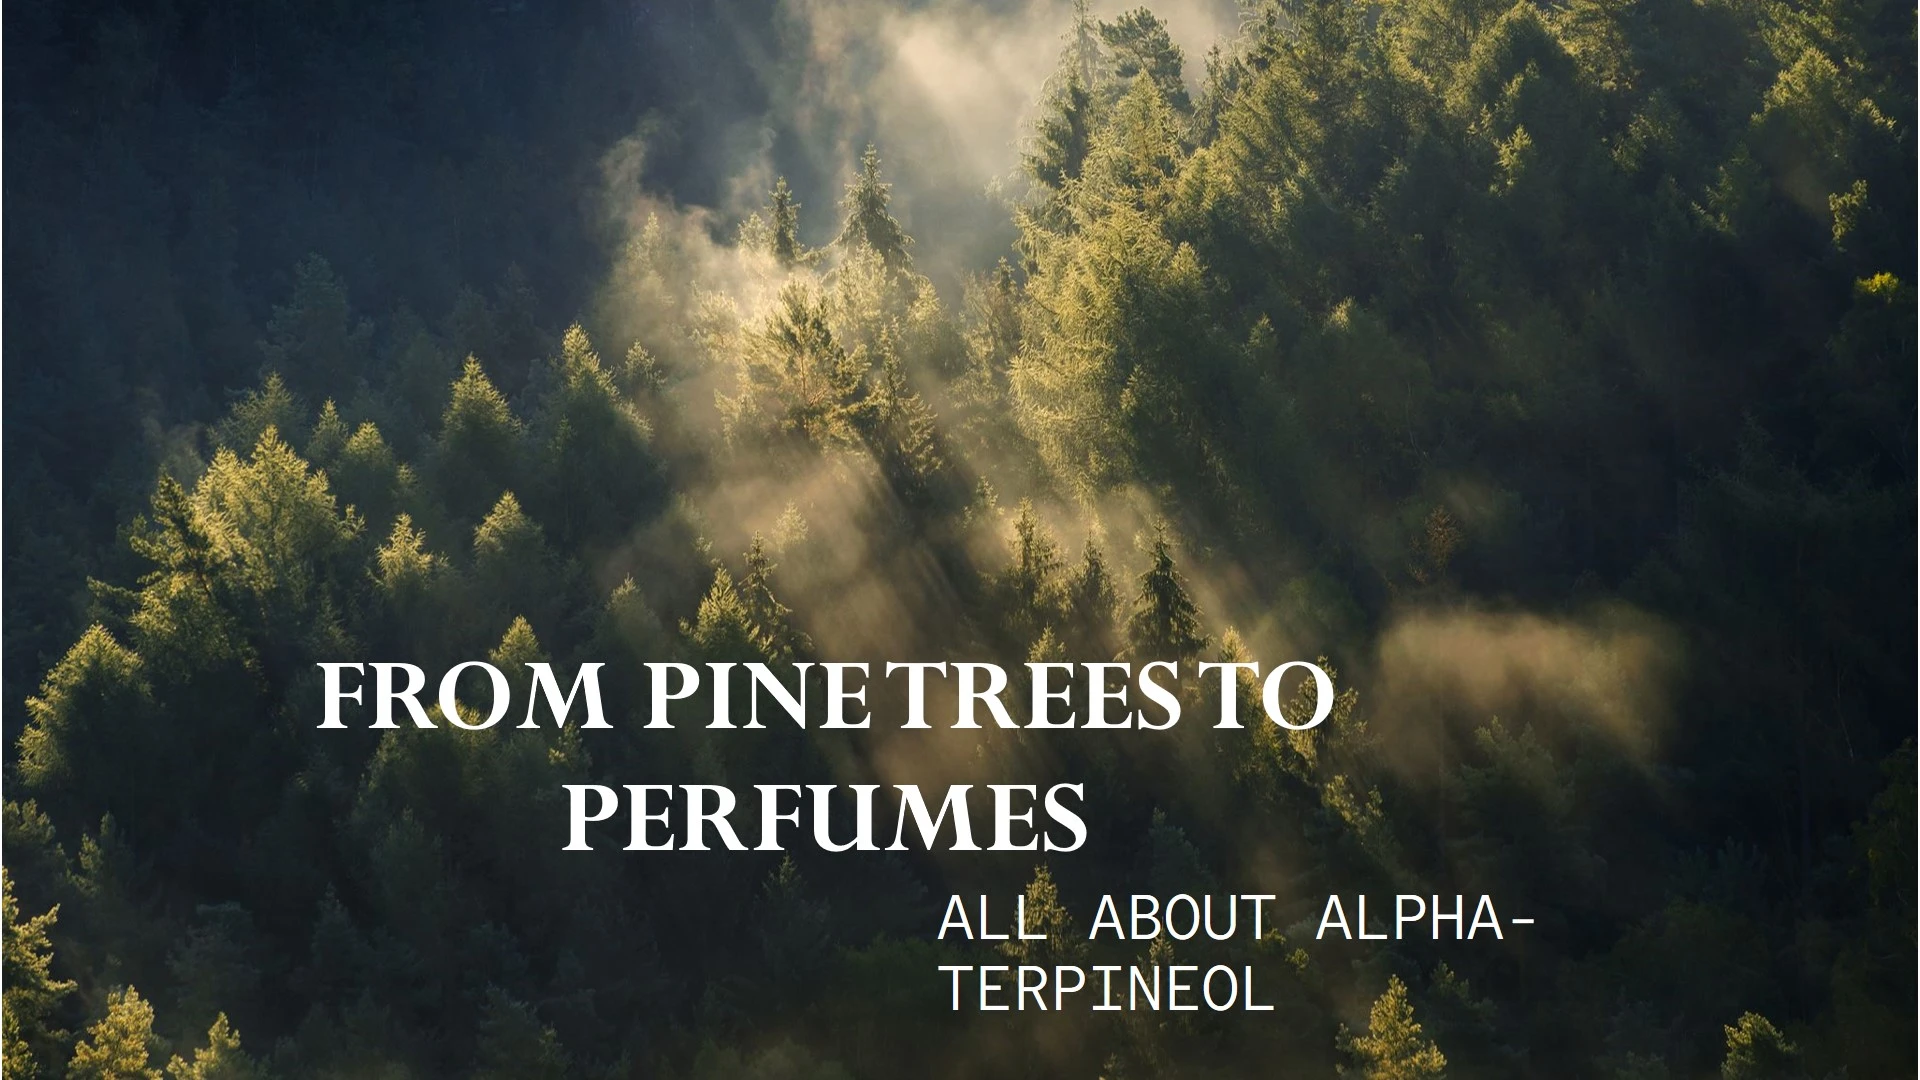 Alpha-Terpineol Pine Trees Perfumes